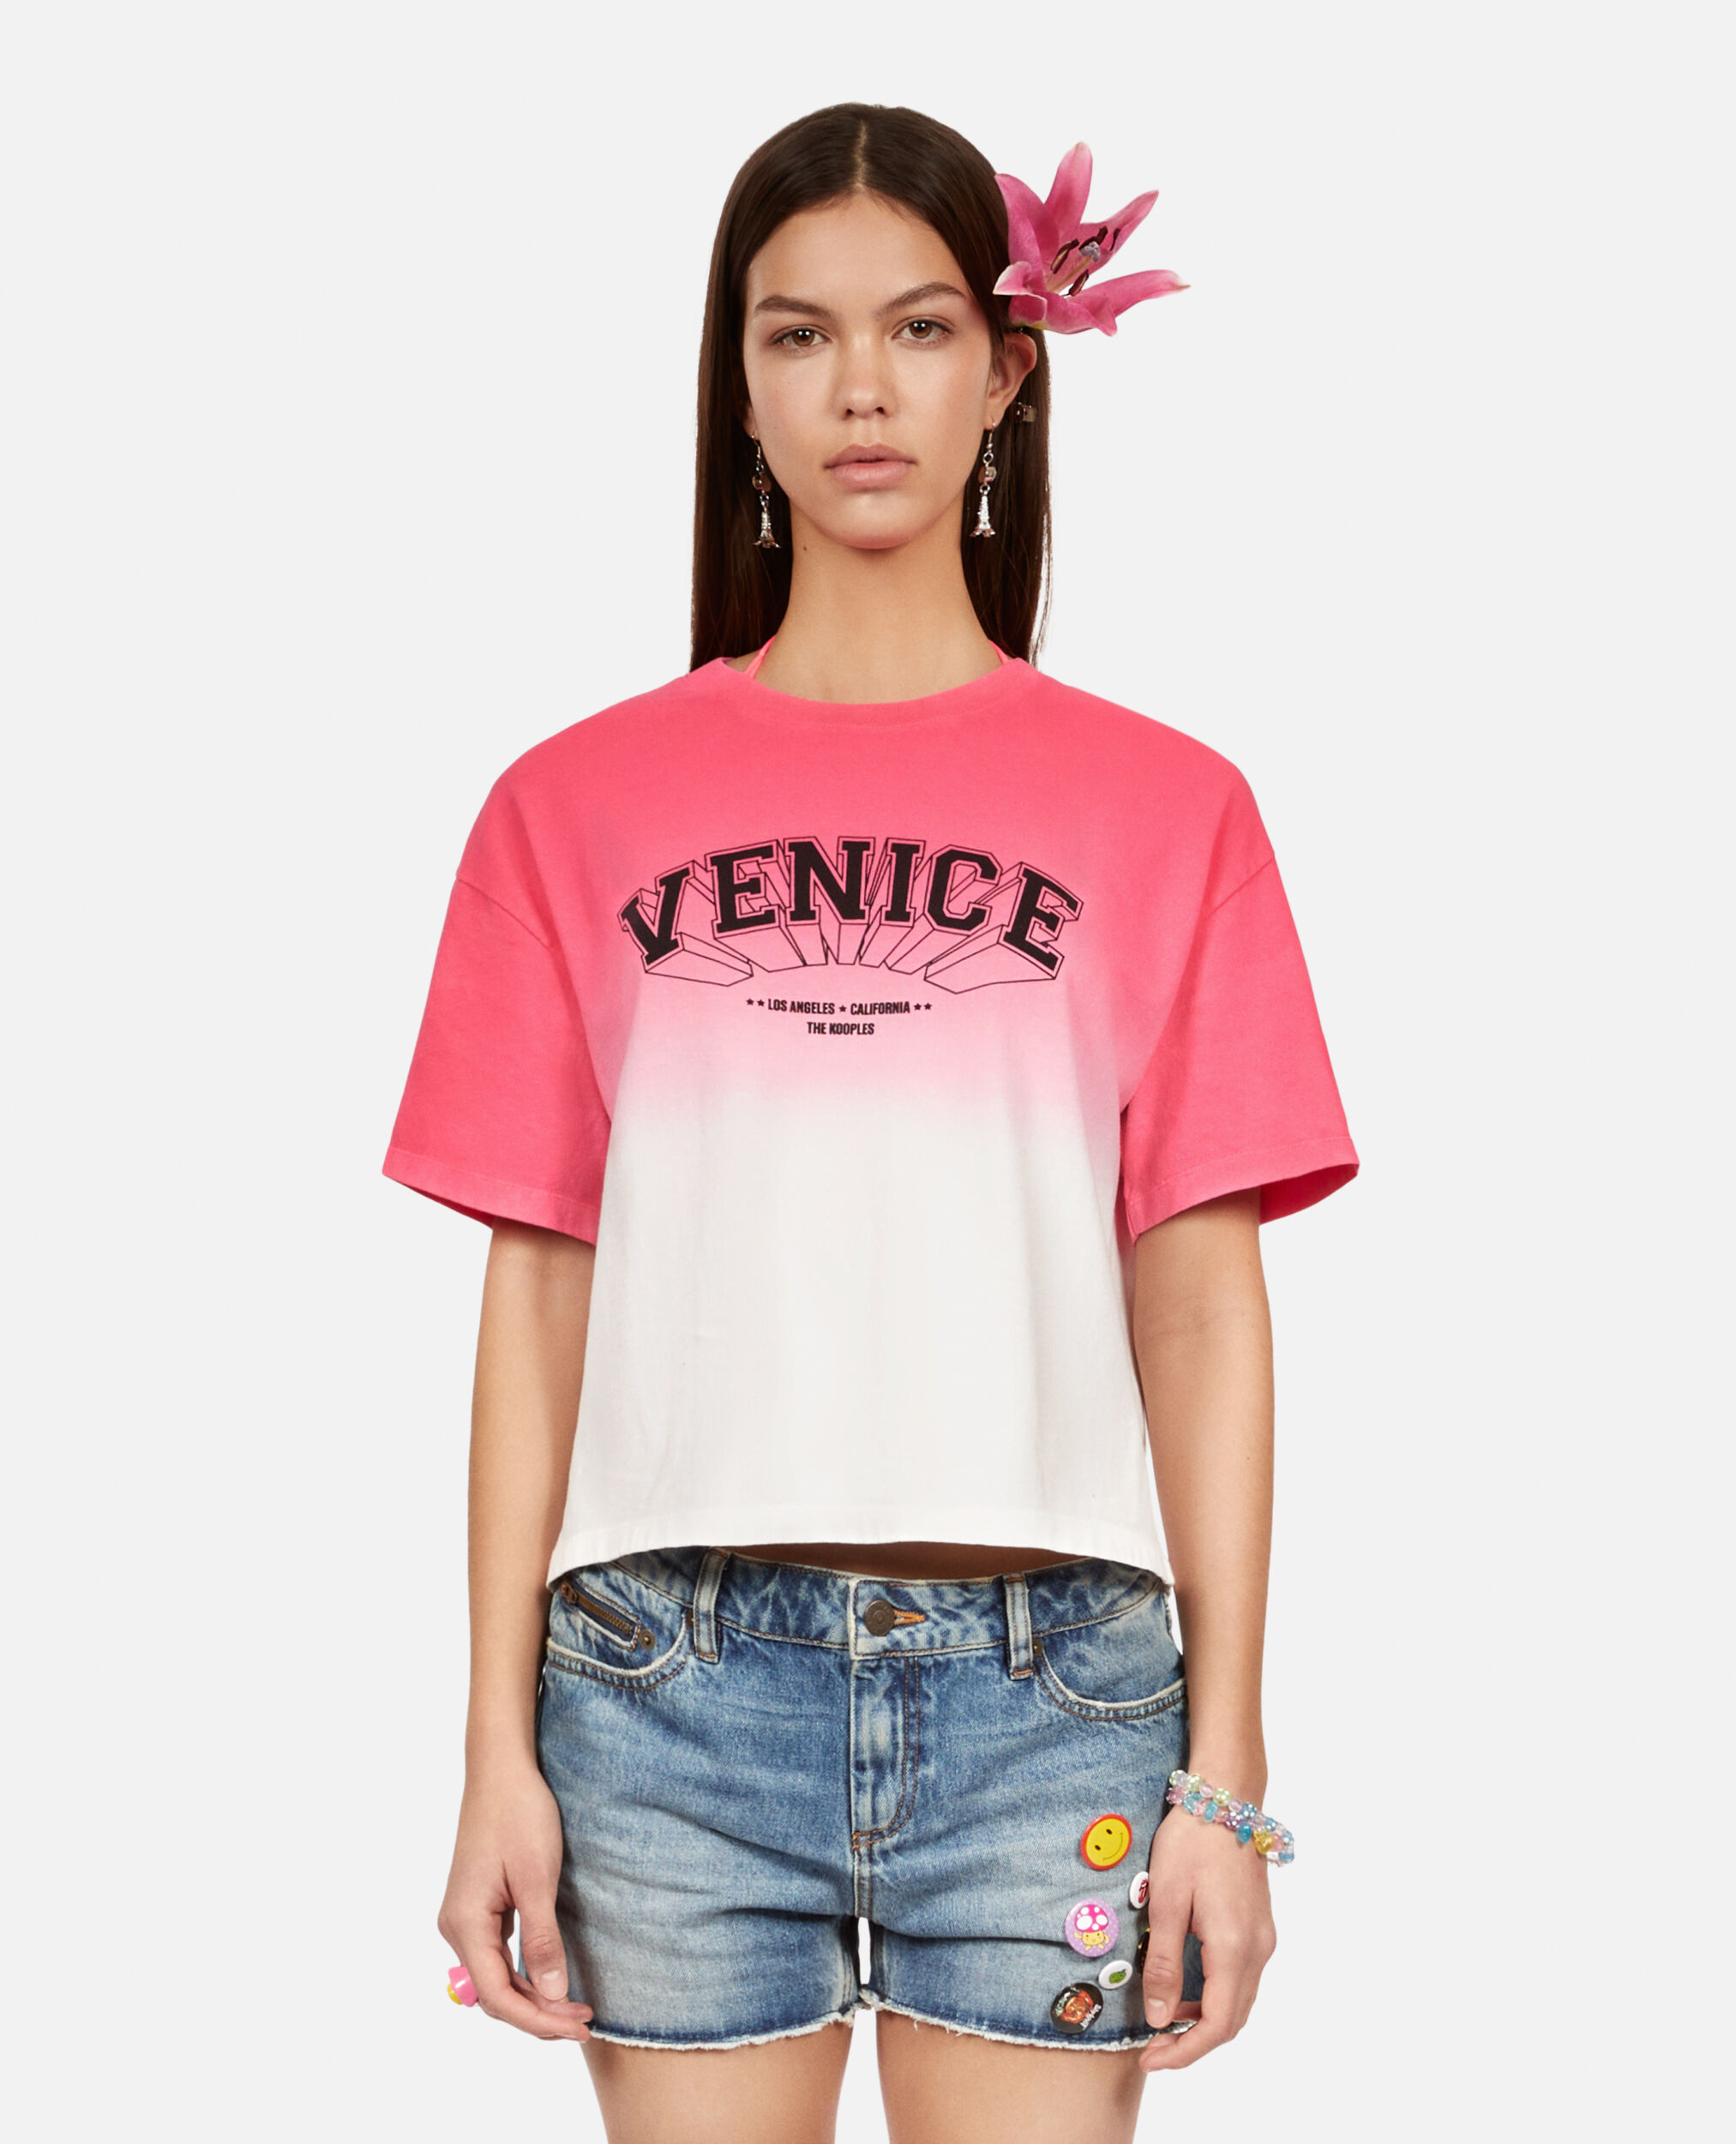 Camiseta rosa degradada serigrafía Venice, RETRO PINK, hi-res image number null